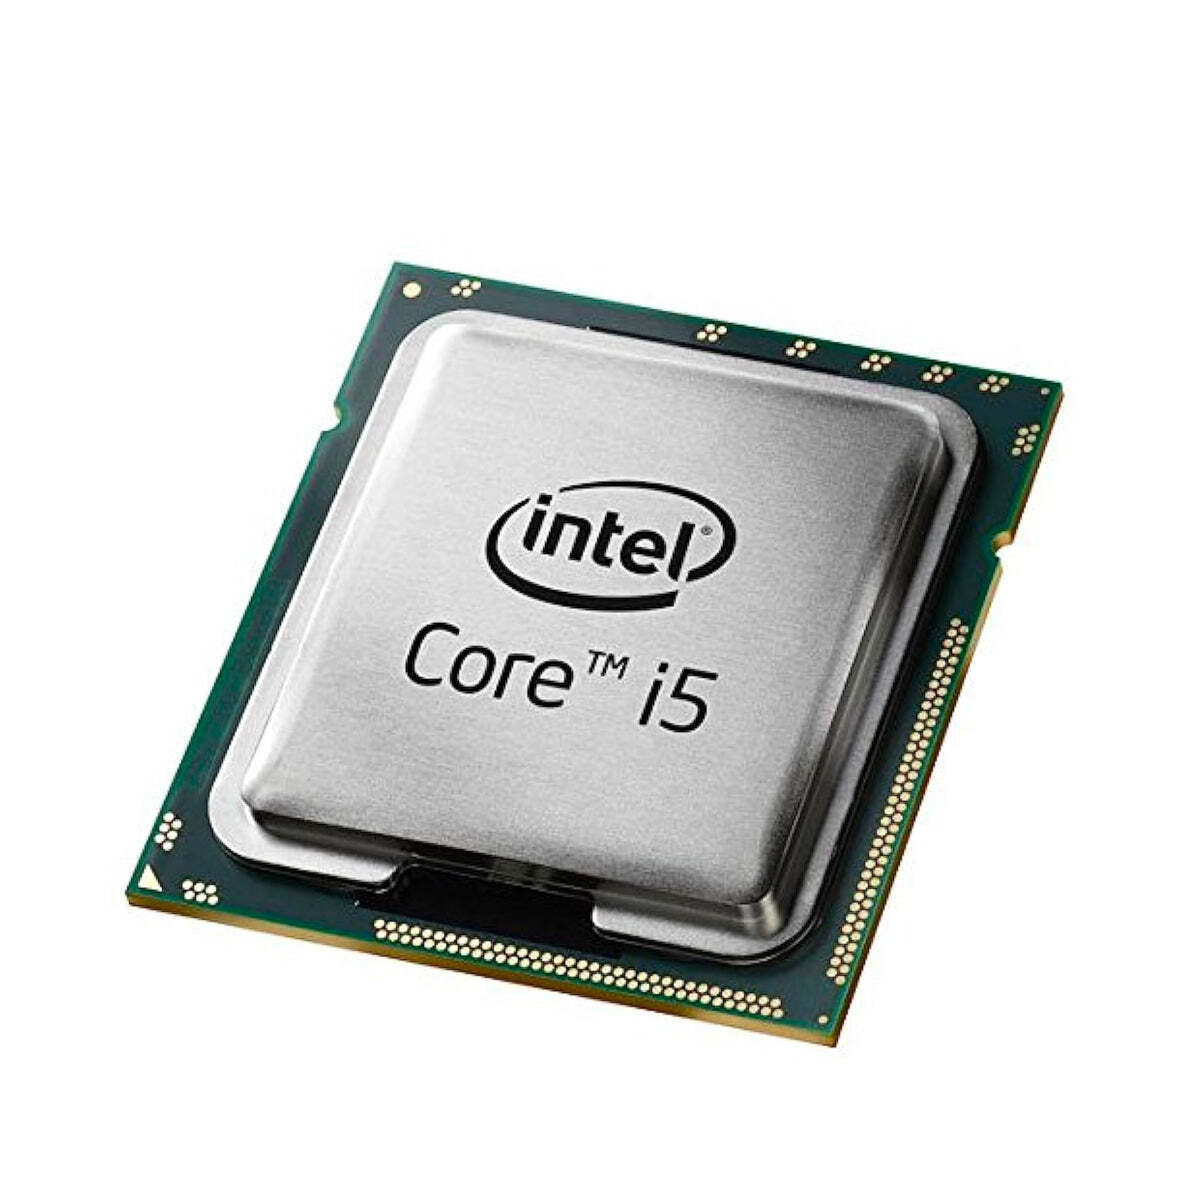 CPU Intel Core i5-3570 - 3.4 GHz, Quad Core Socket FCLGA1155 #SR0T7 Processor